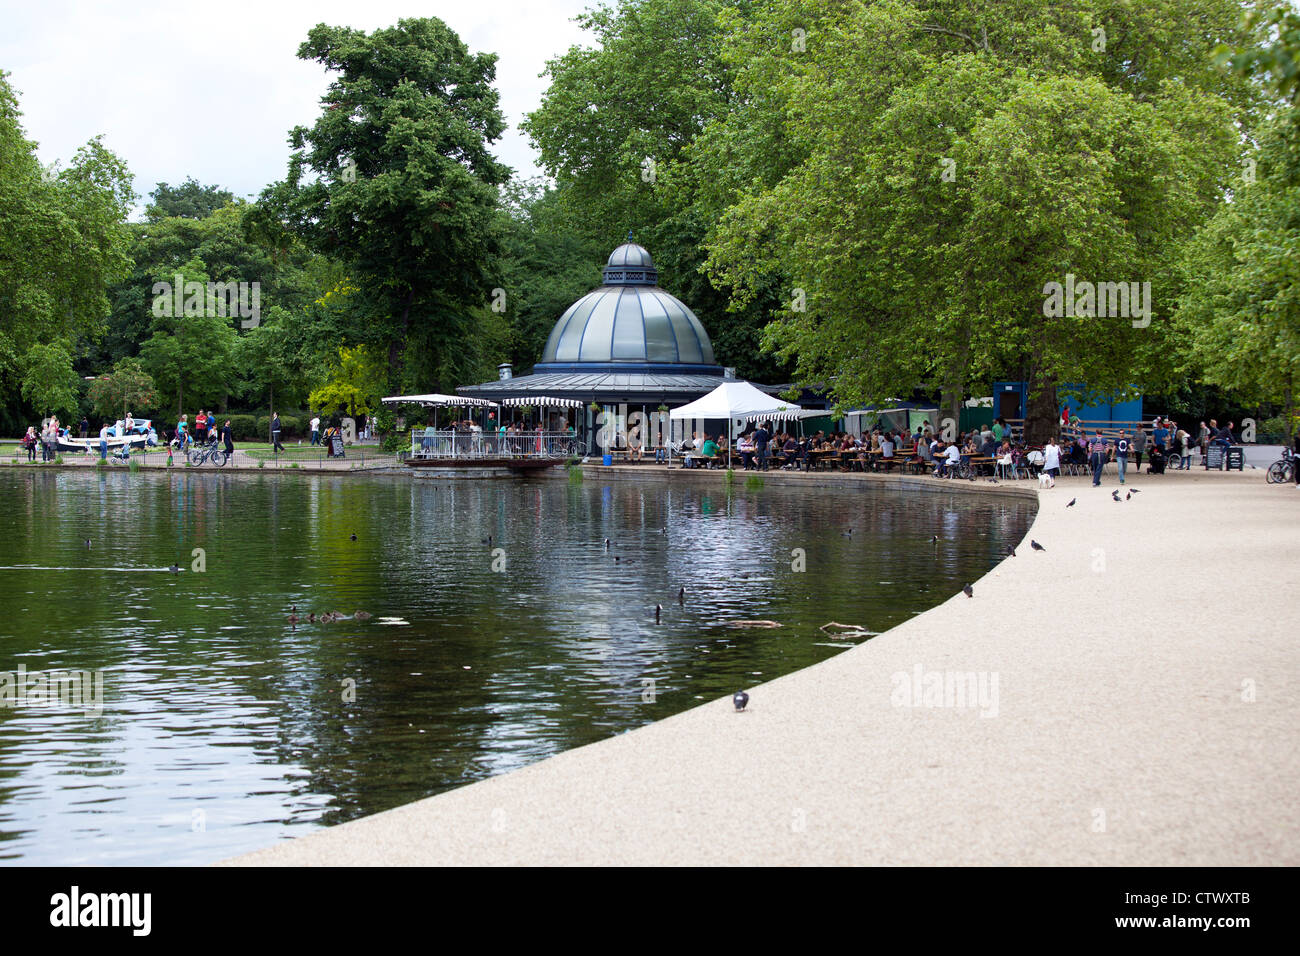 Pavilion on the boating lake, Victoria Park, East London, UK. Stock Photo